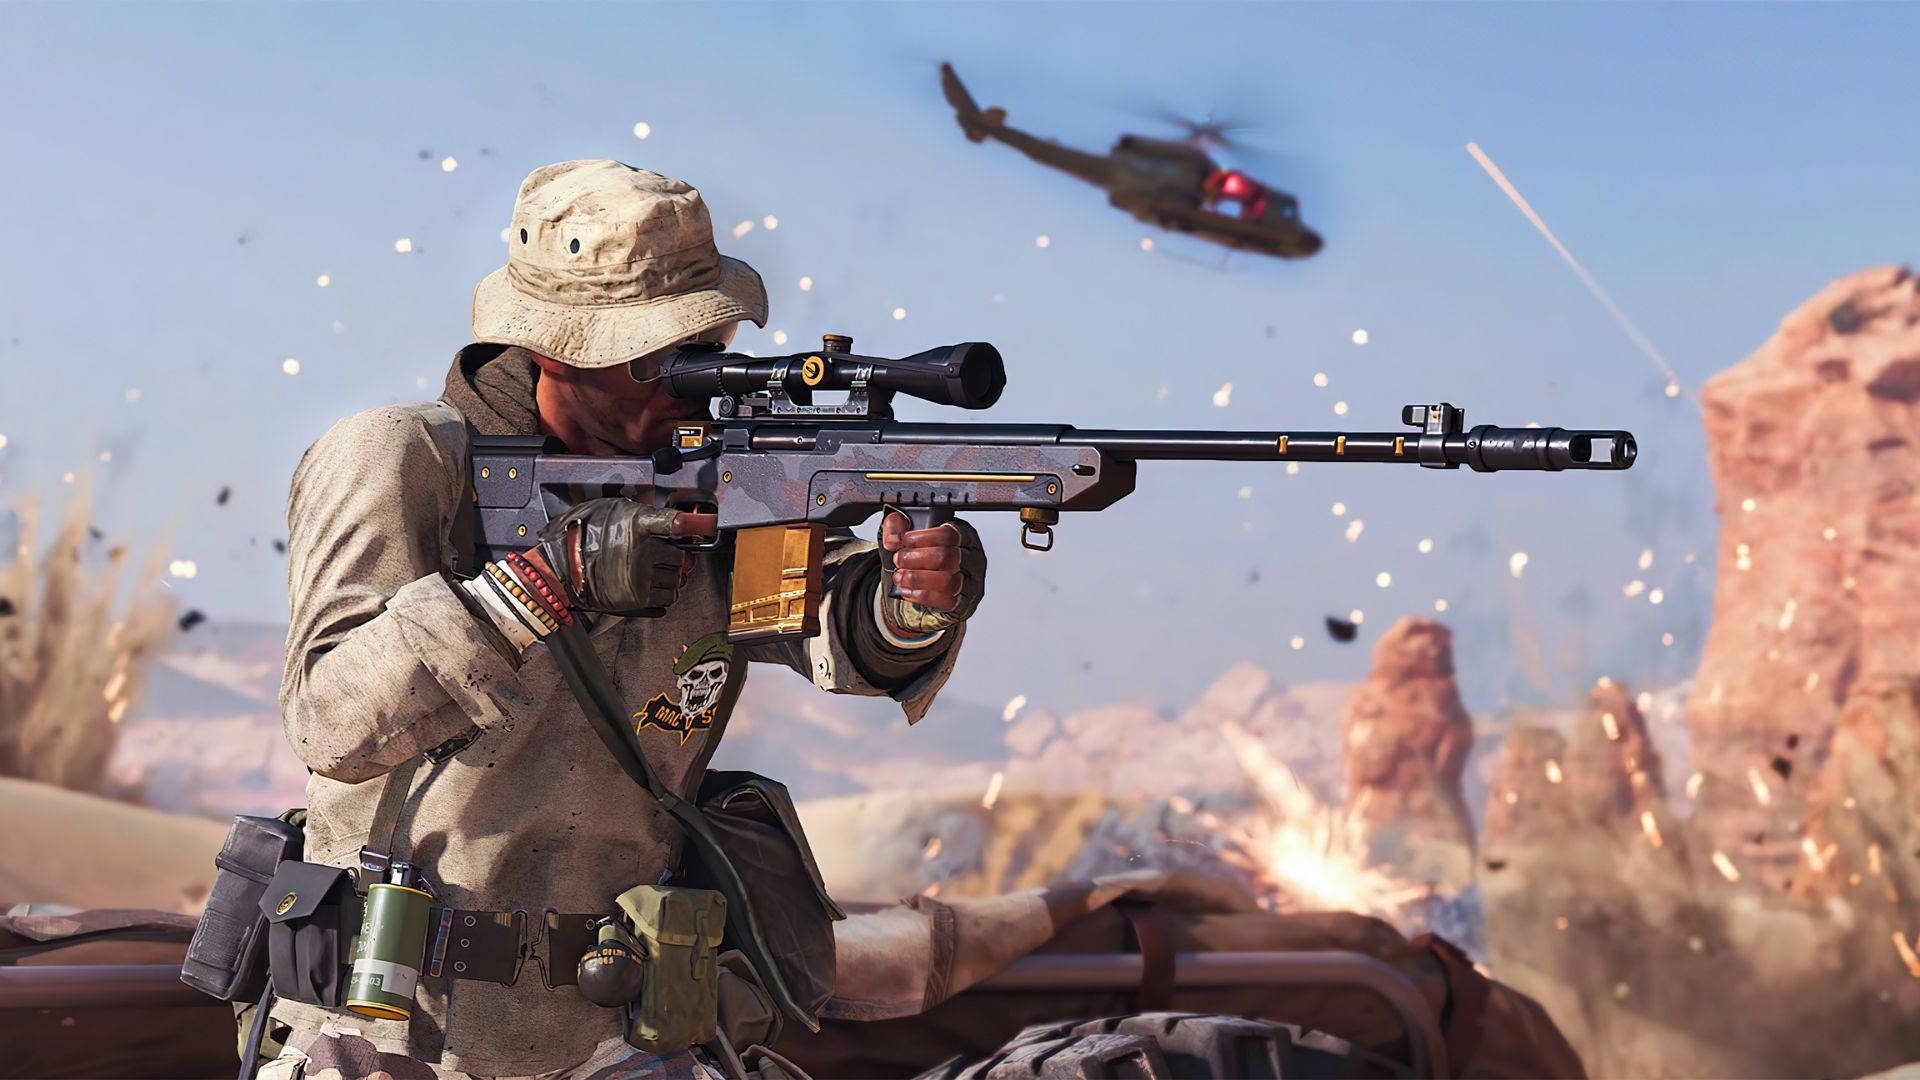 Sniper Soldier In War Wallpaper